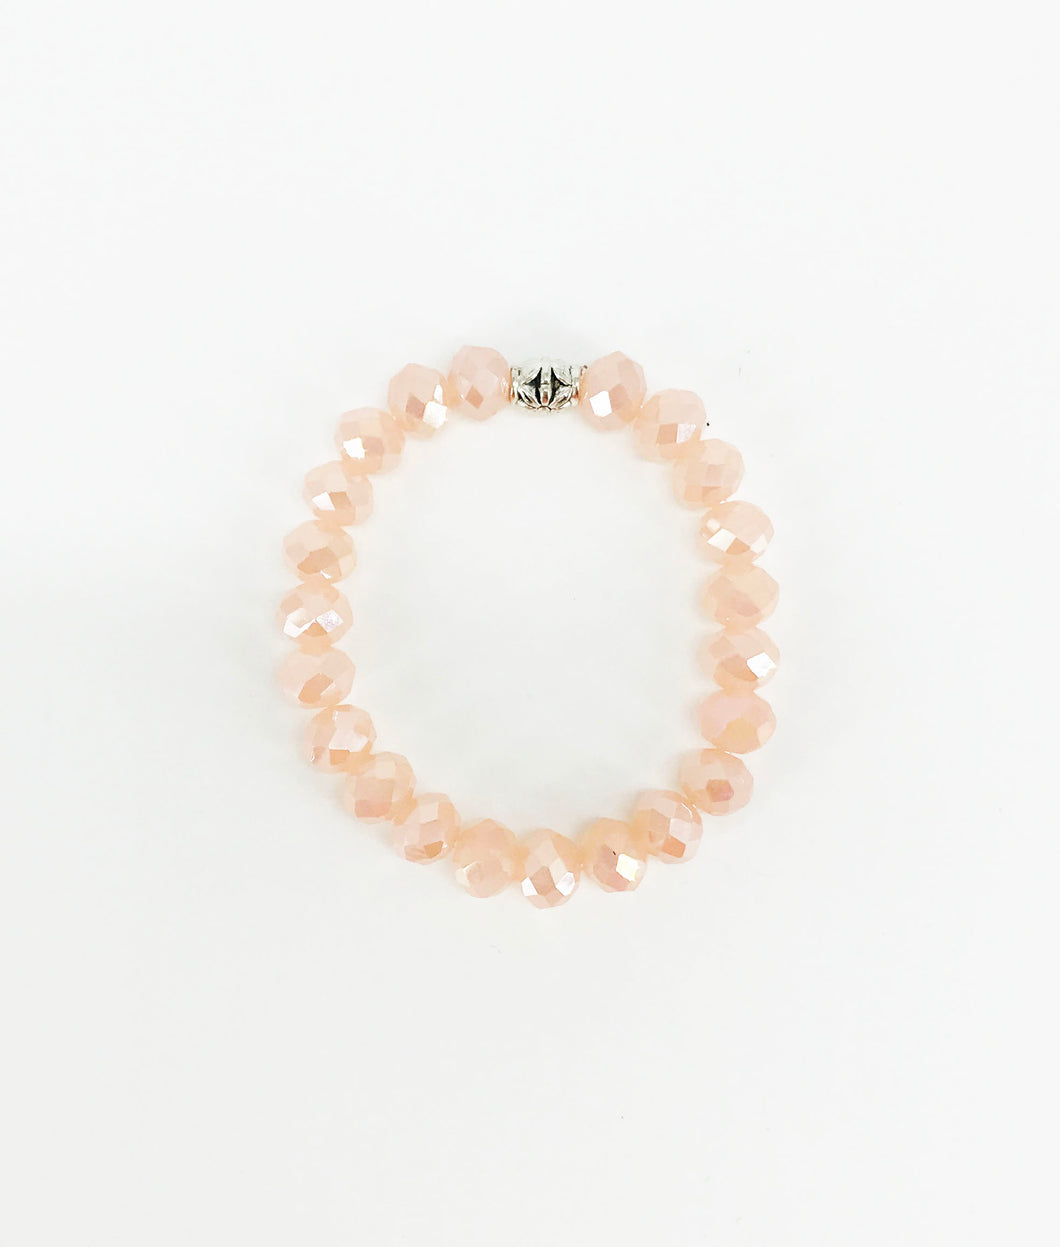 Pink AB Glass Bead Stretchy Bracelet